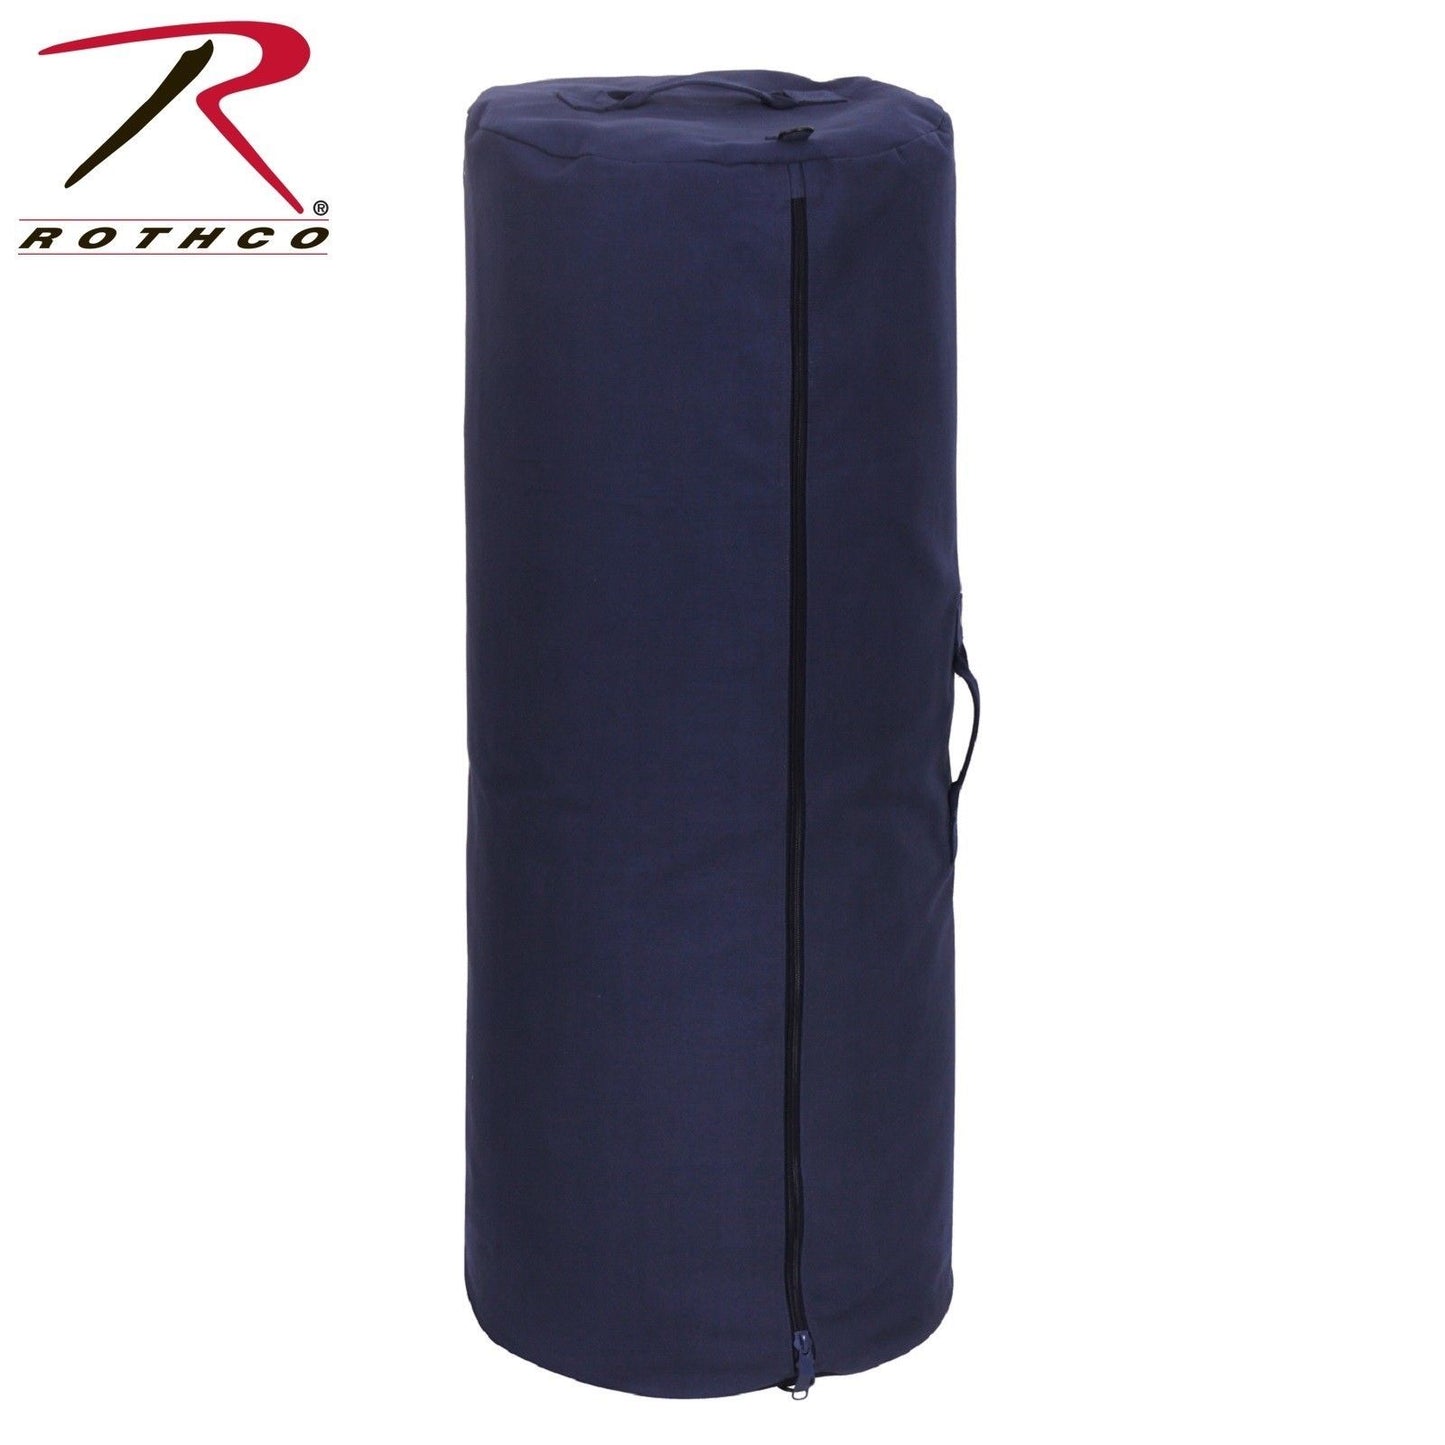 Rothco Canvas Duffle Bag With Side Zipper - 30" x 50" Jumbo Side Zip Gear Bag